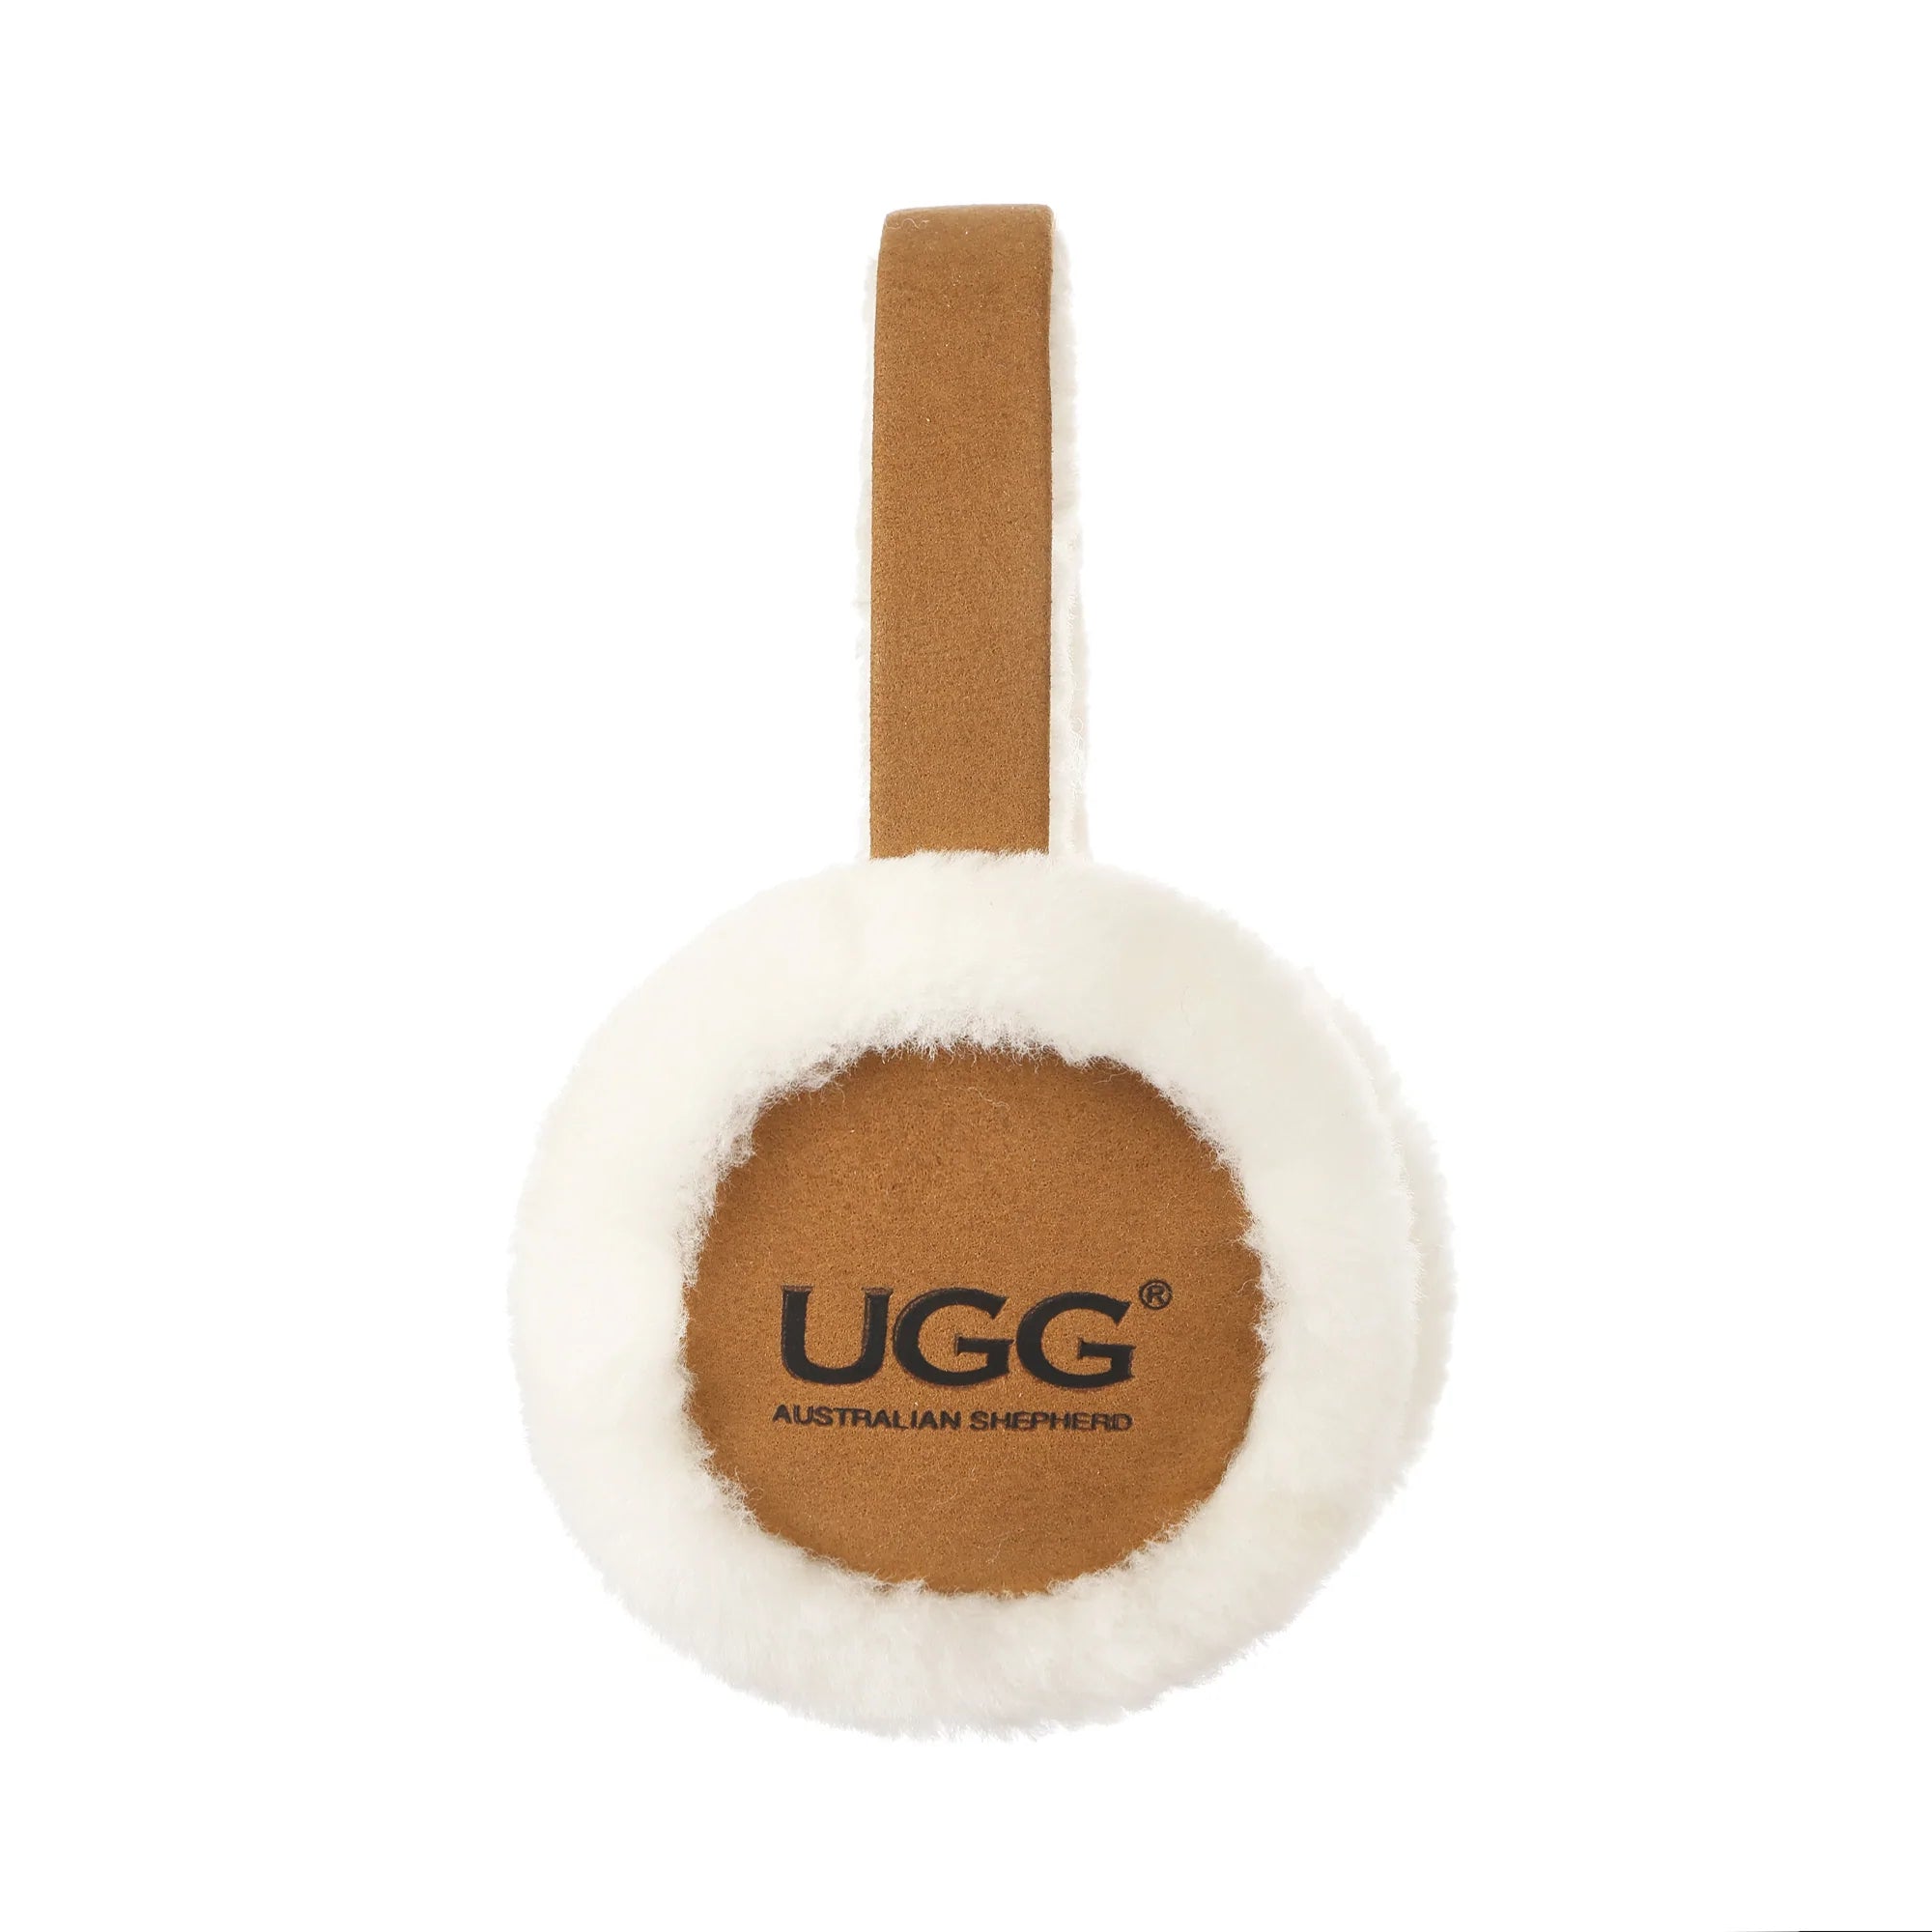  - UGG Kid's Earmuff - Original UGG Australia Classic